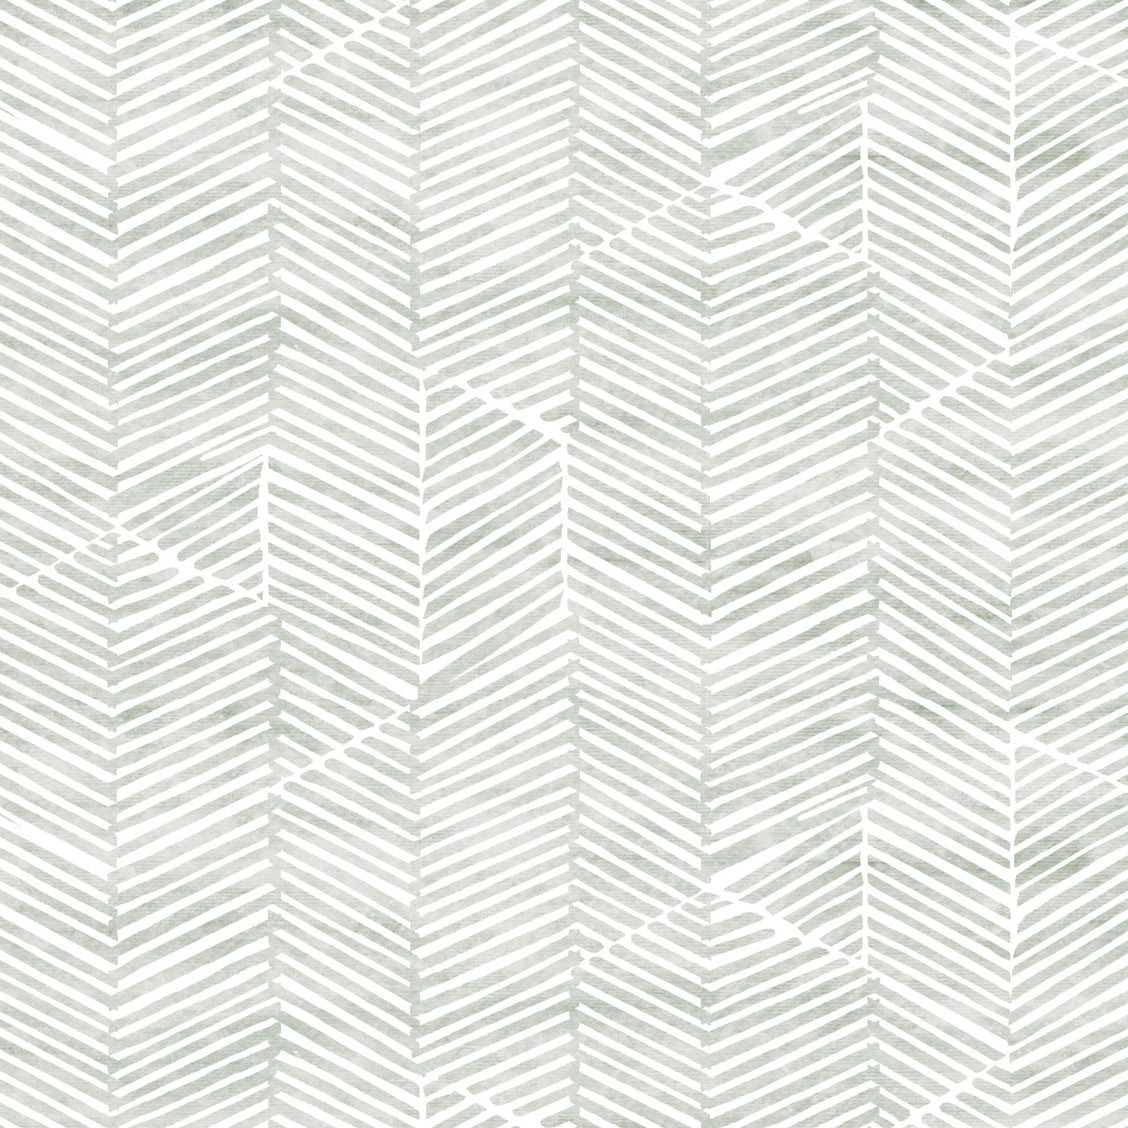 Detail of fabric in a dense herringbone print in light green on a white field.